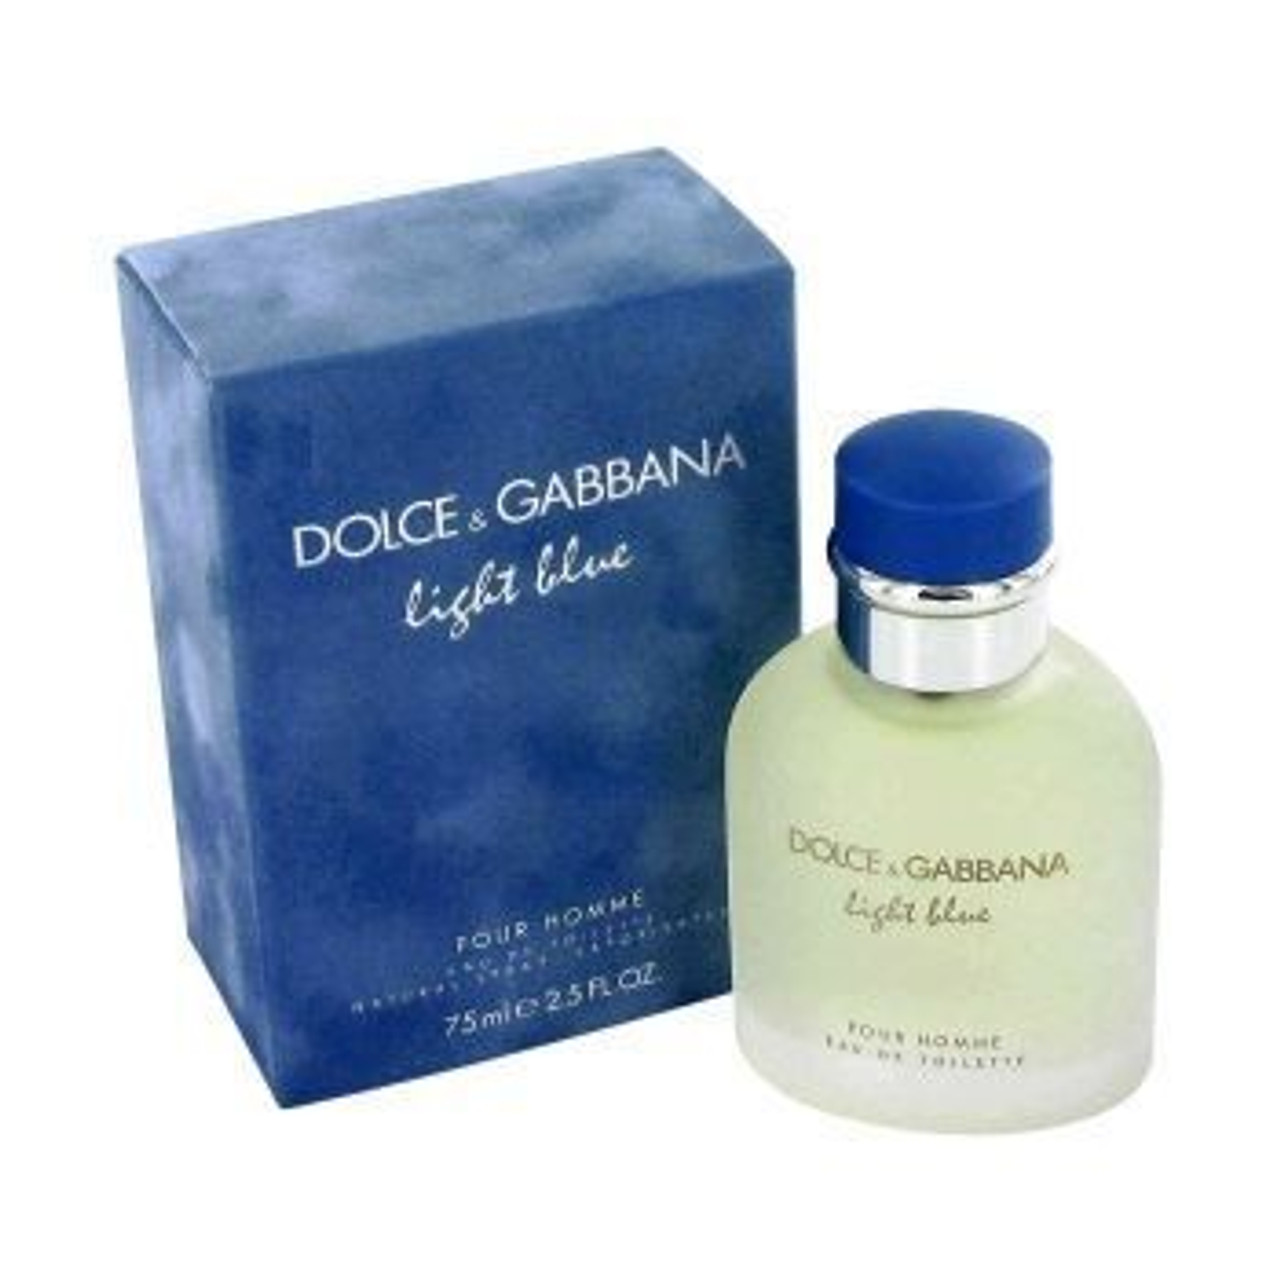 Dolce & Gabbana Light Blue Eau De Toilette Fragrance for Men - 6.7 fl oz bottle